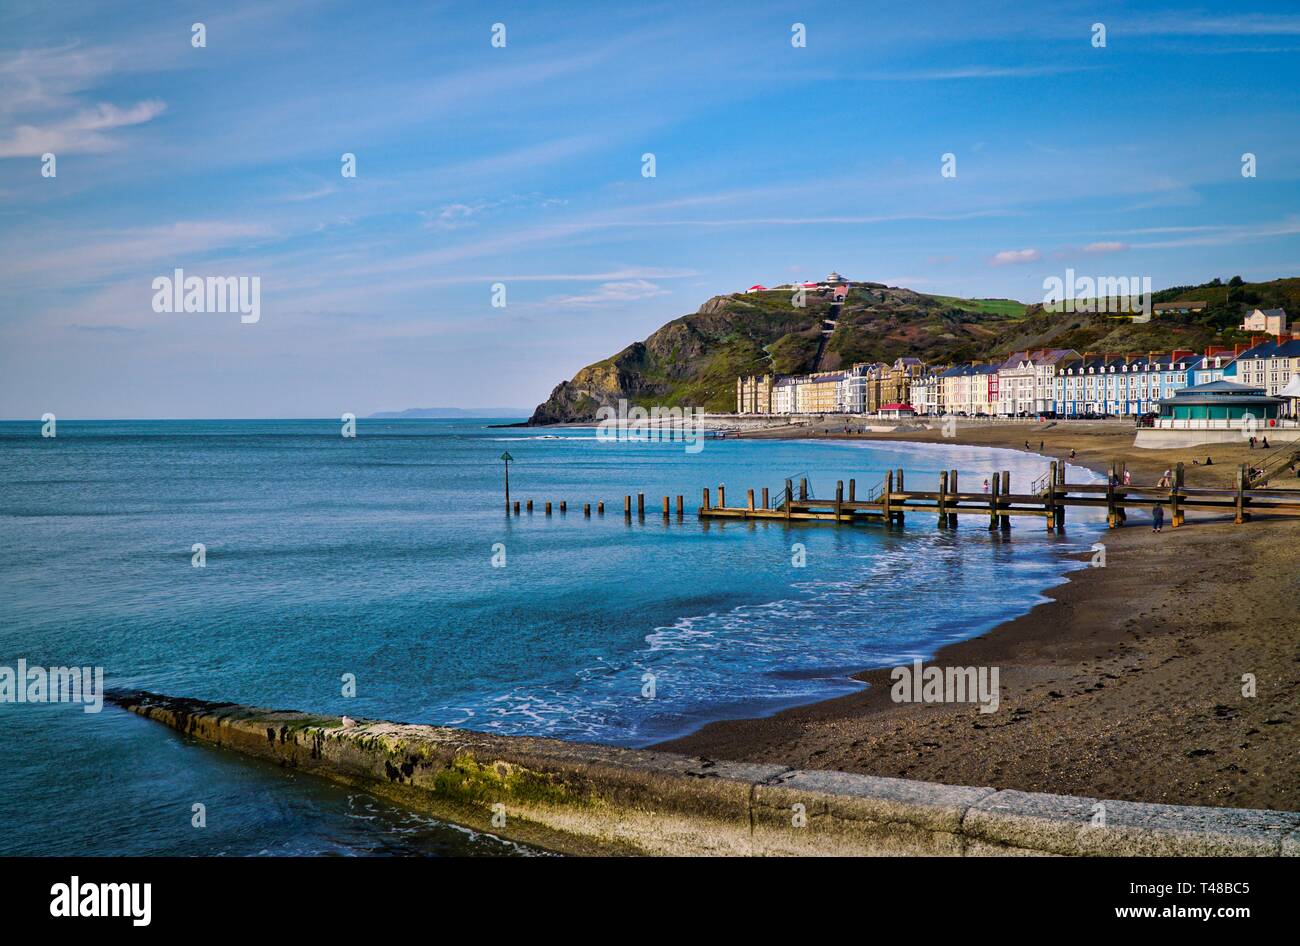 Aberystwyth - Seafront Promenade - Coastal Scenery Stock Photo